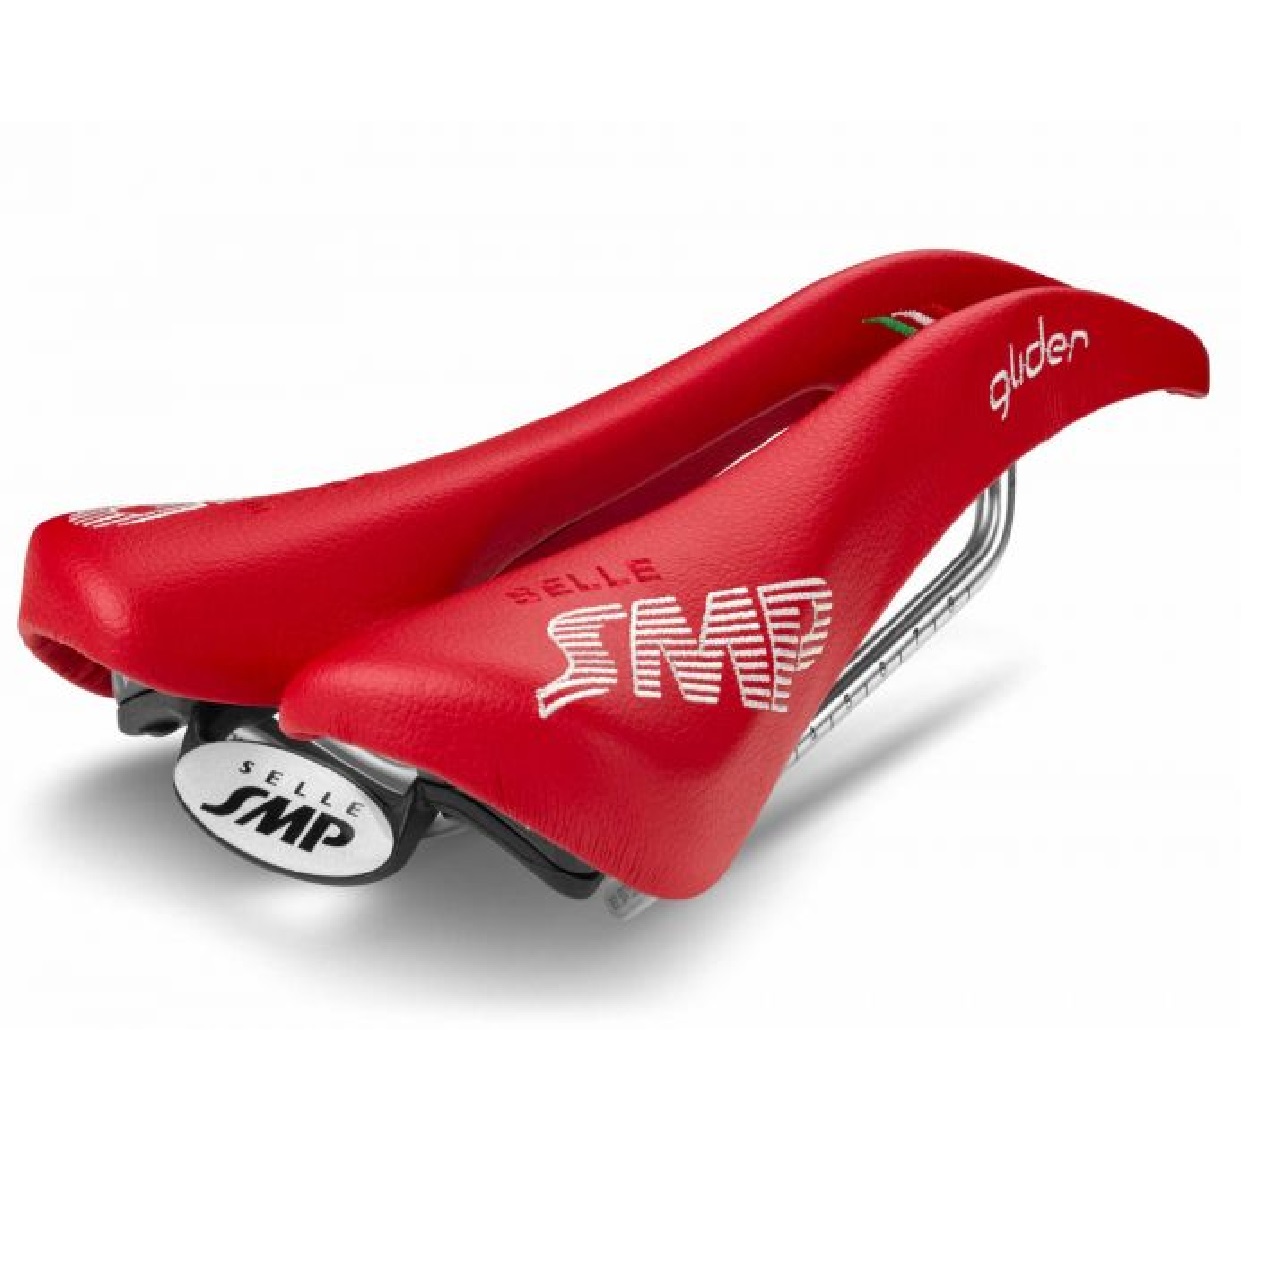 Selle SMP Glider Pro Bike Saddle Bike Seat Red